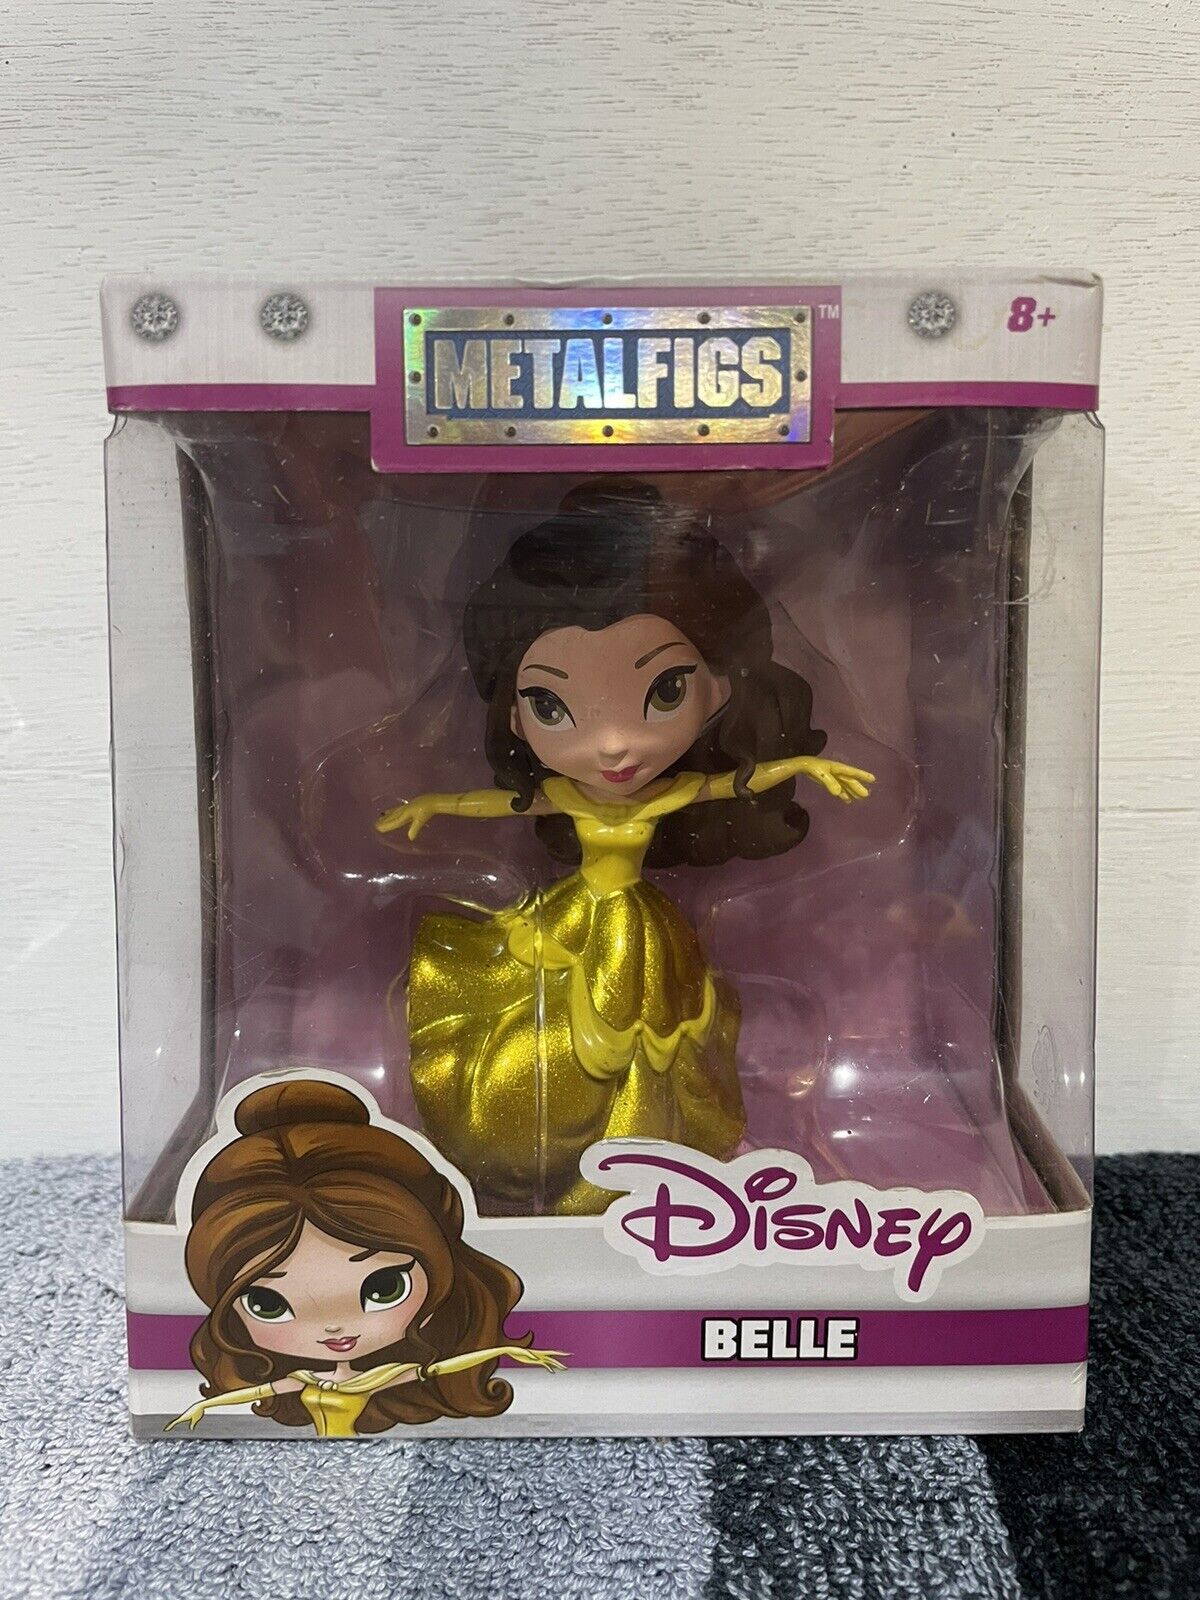 Disney Metalfigs (Belle) Beauty & The Beast Diecast Figure Jada Toys 2017